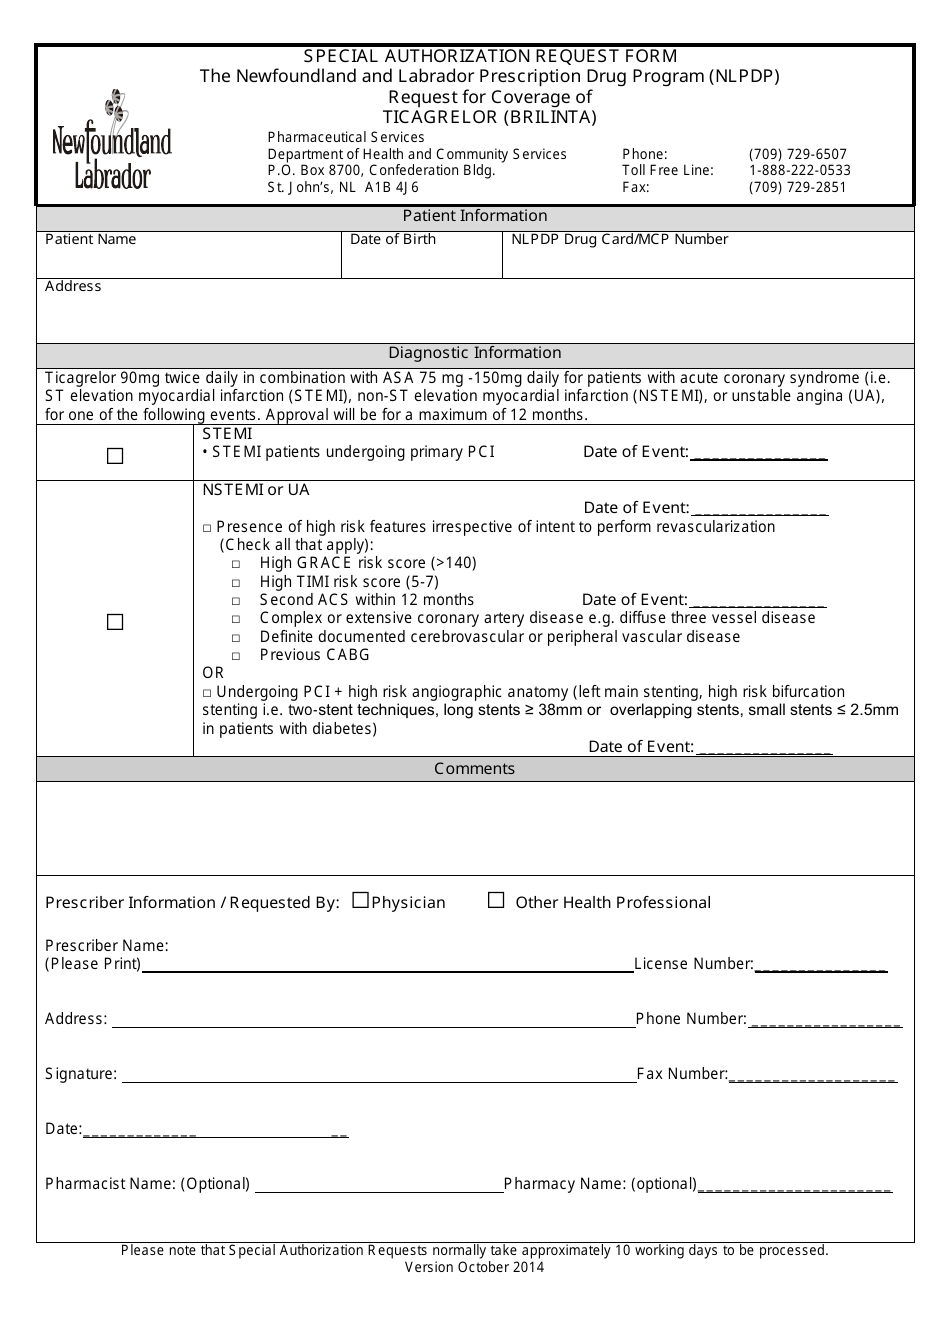 Special Authorization Request Form - Ticagrelor (Brilinta) - Newfoundland and Labrador, Canada, Page 1